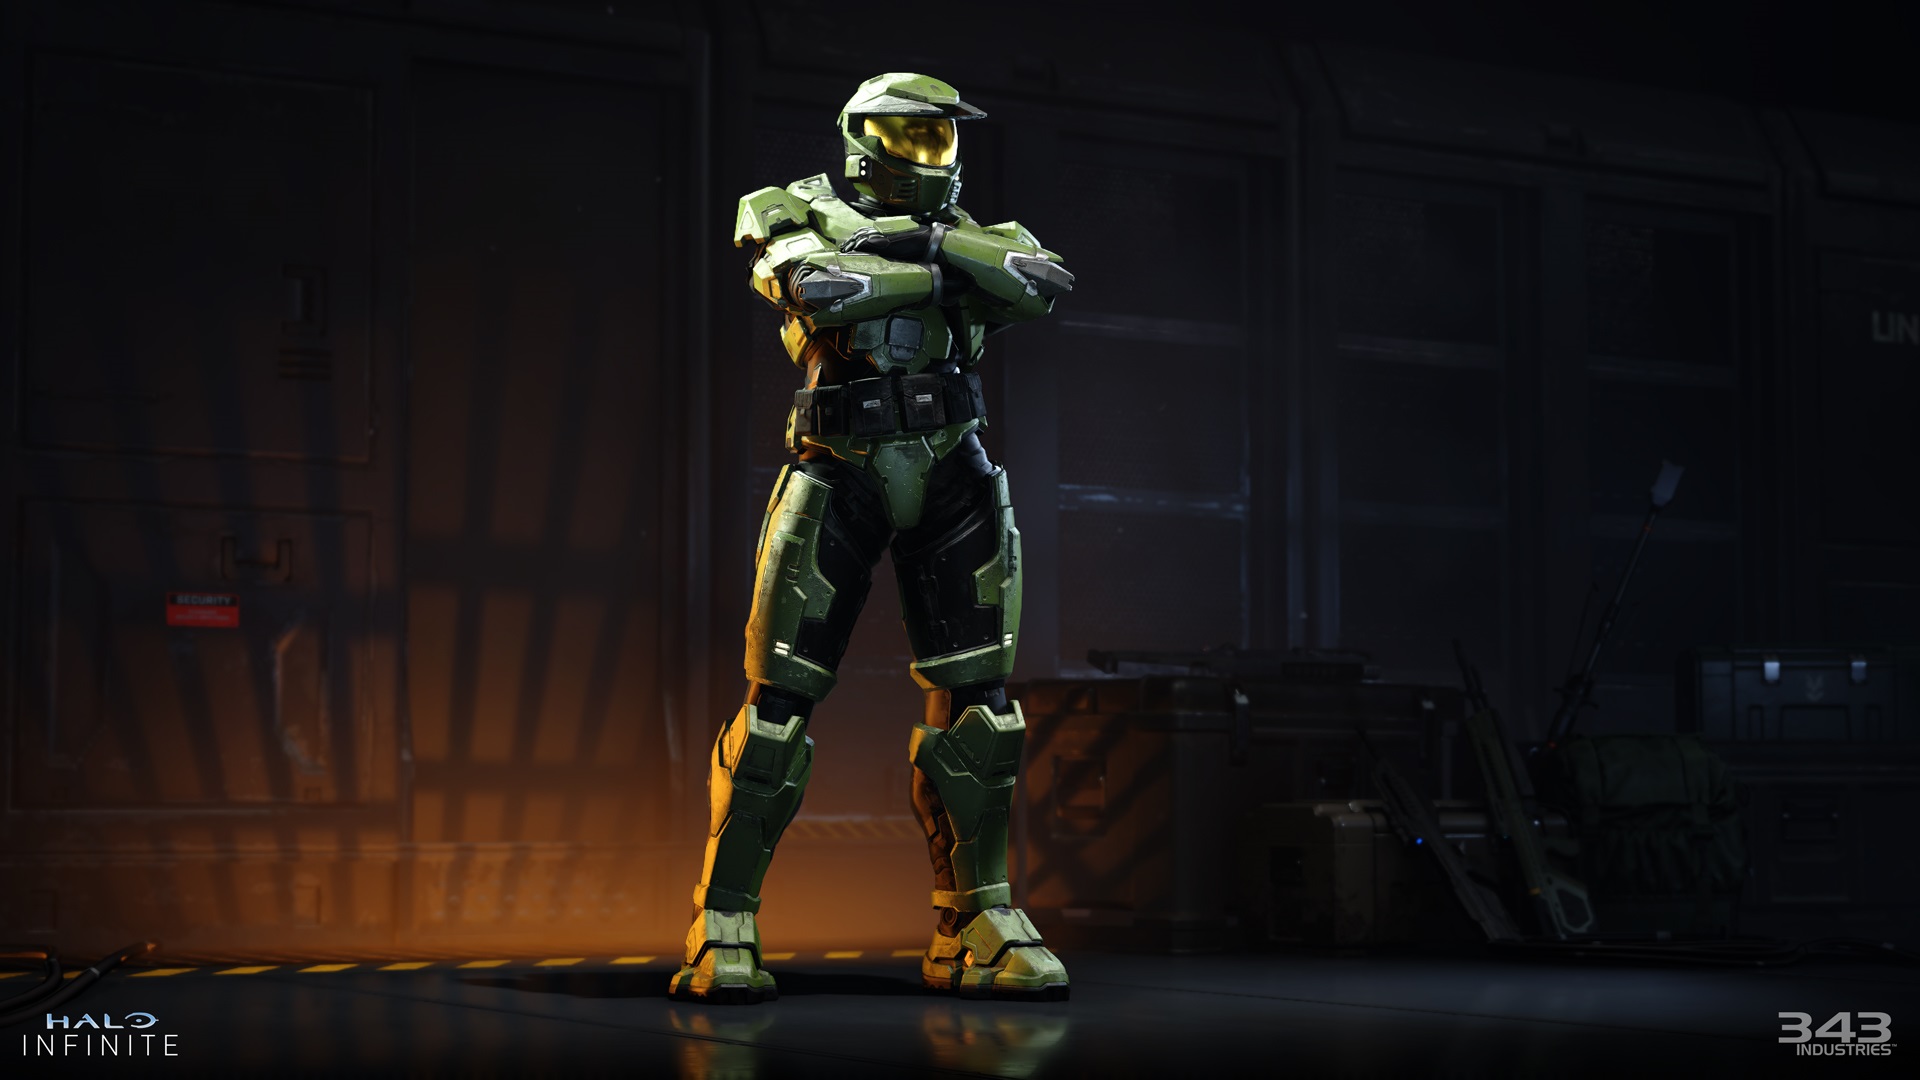 Halo Infinite image of the CE Mark V armor kit